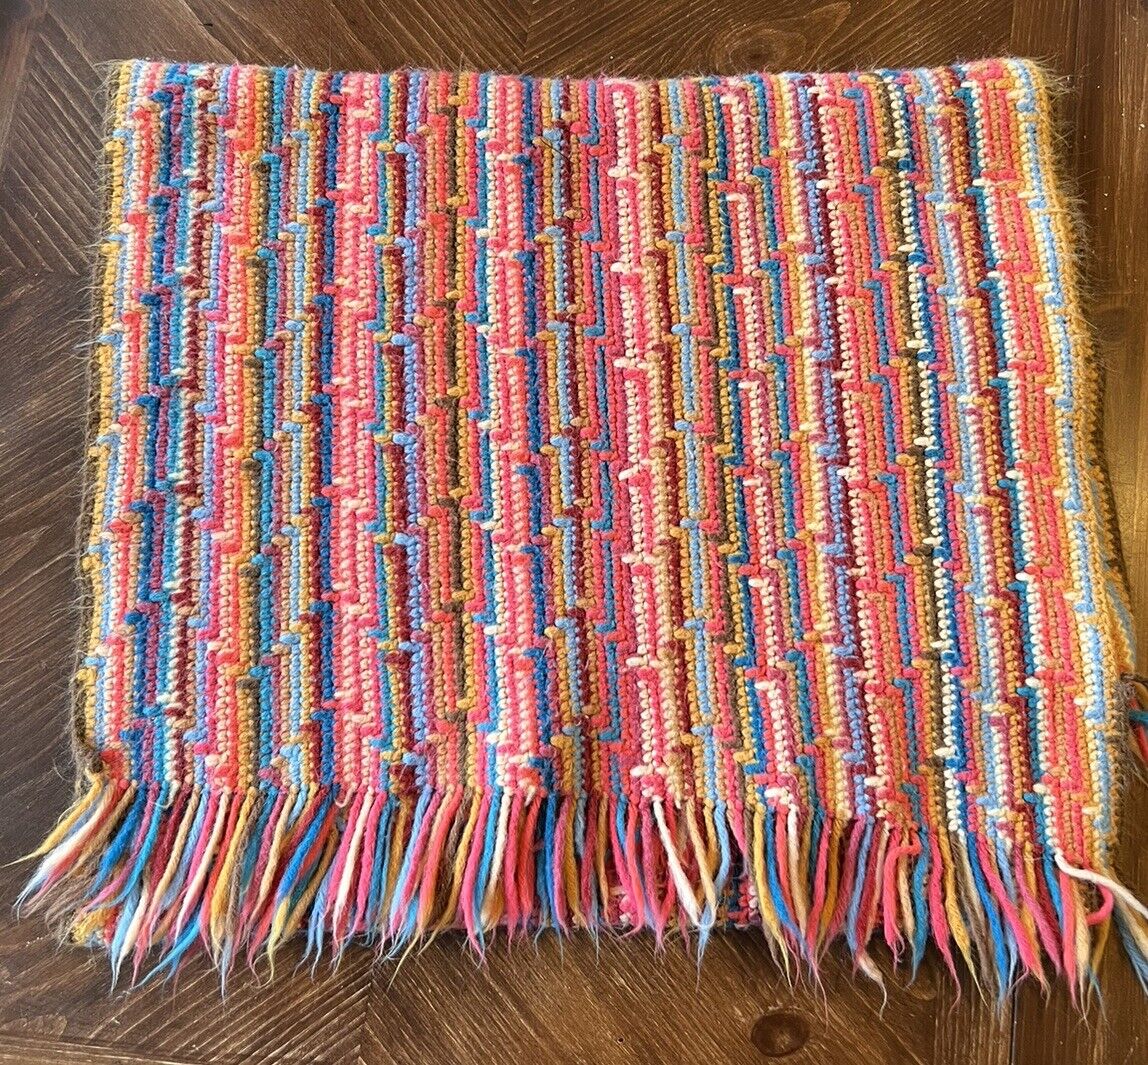 Vintage Grandma's Handmade Knit 1970s Groovy Table Dresser Runner Multicolor